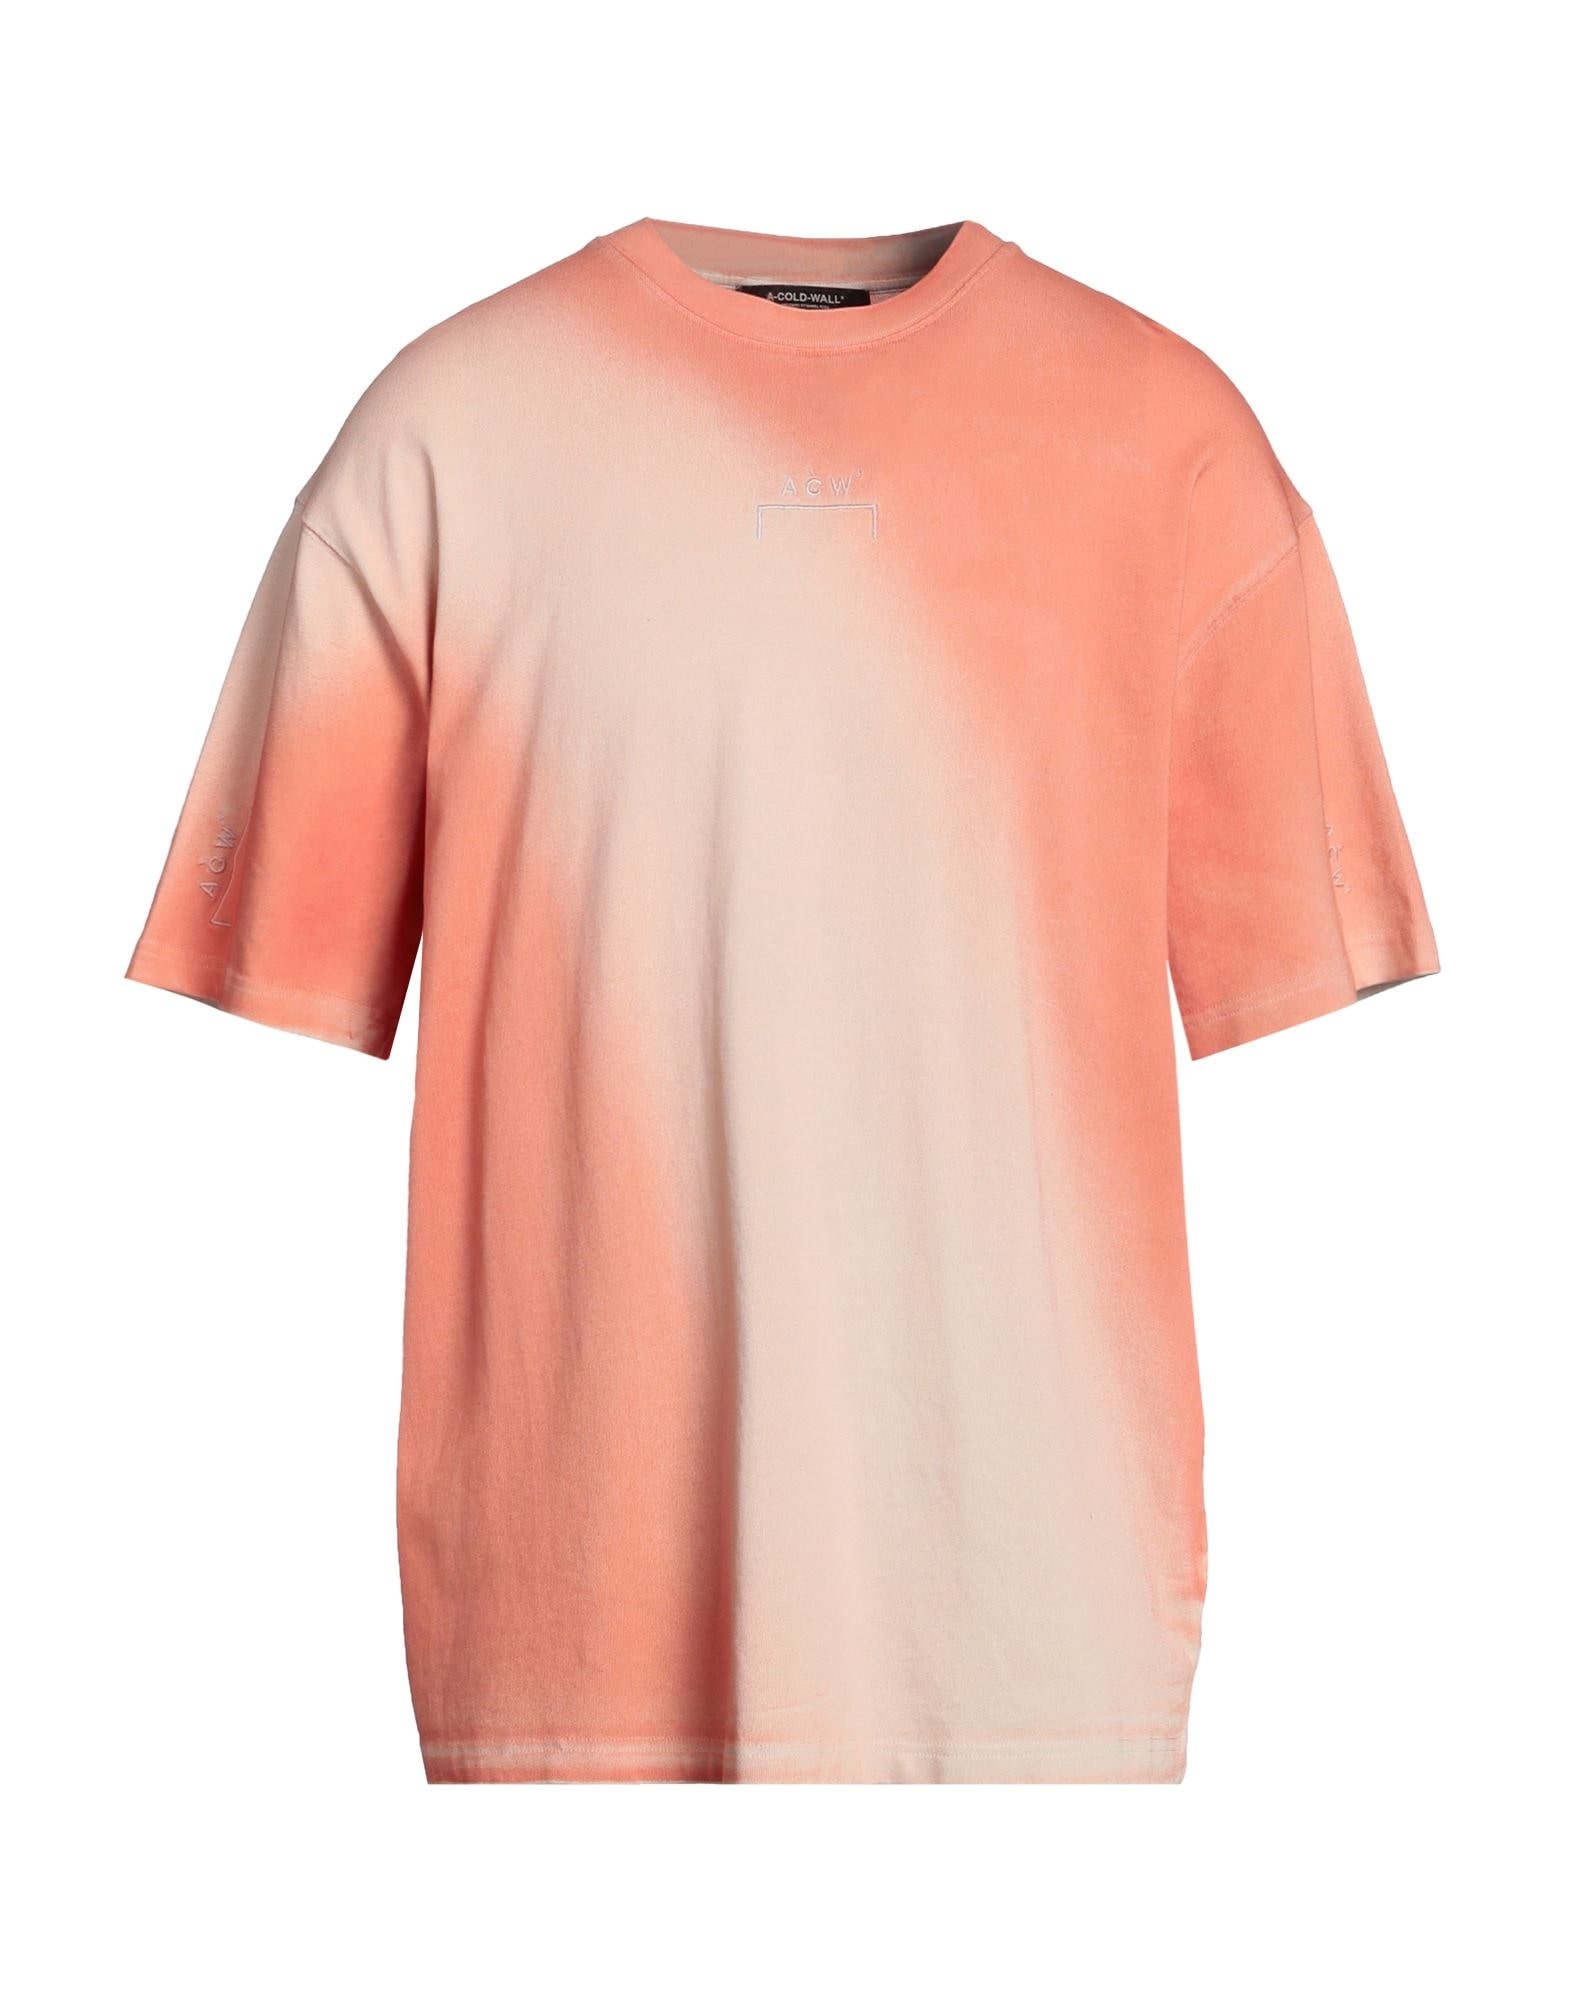 Rust Men's T-shirt - 1